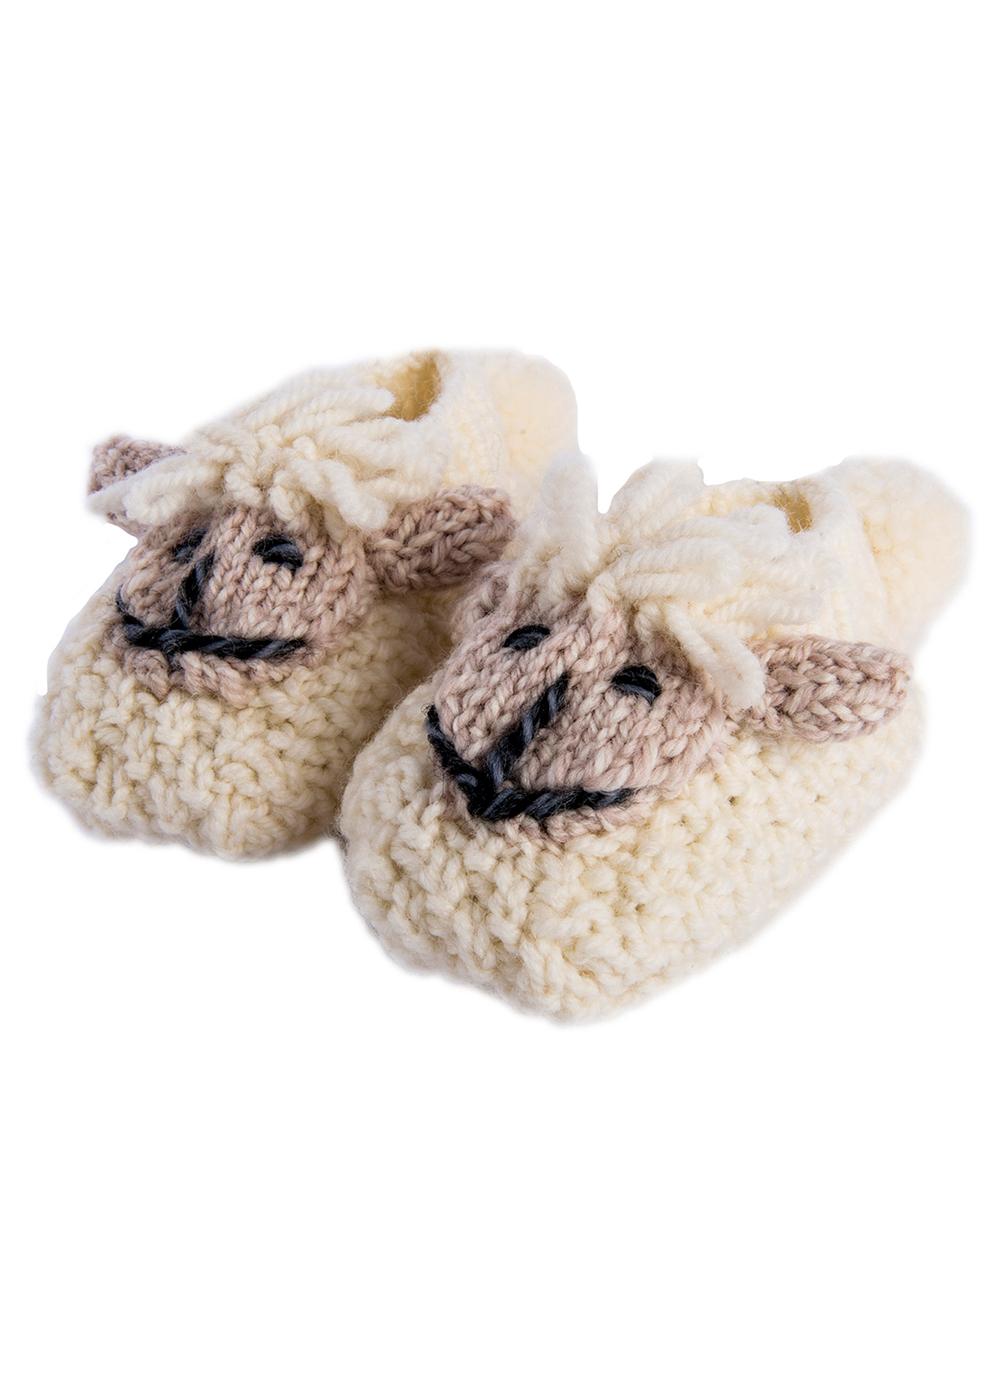 Baby Hand-Knit Sheep Booties | Blarney